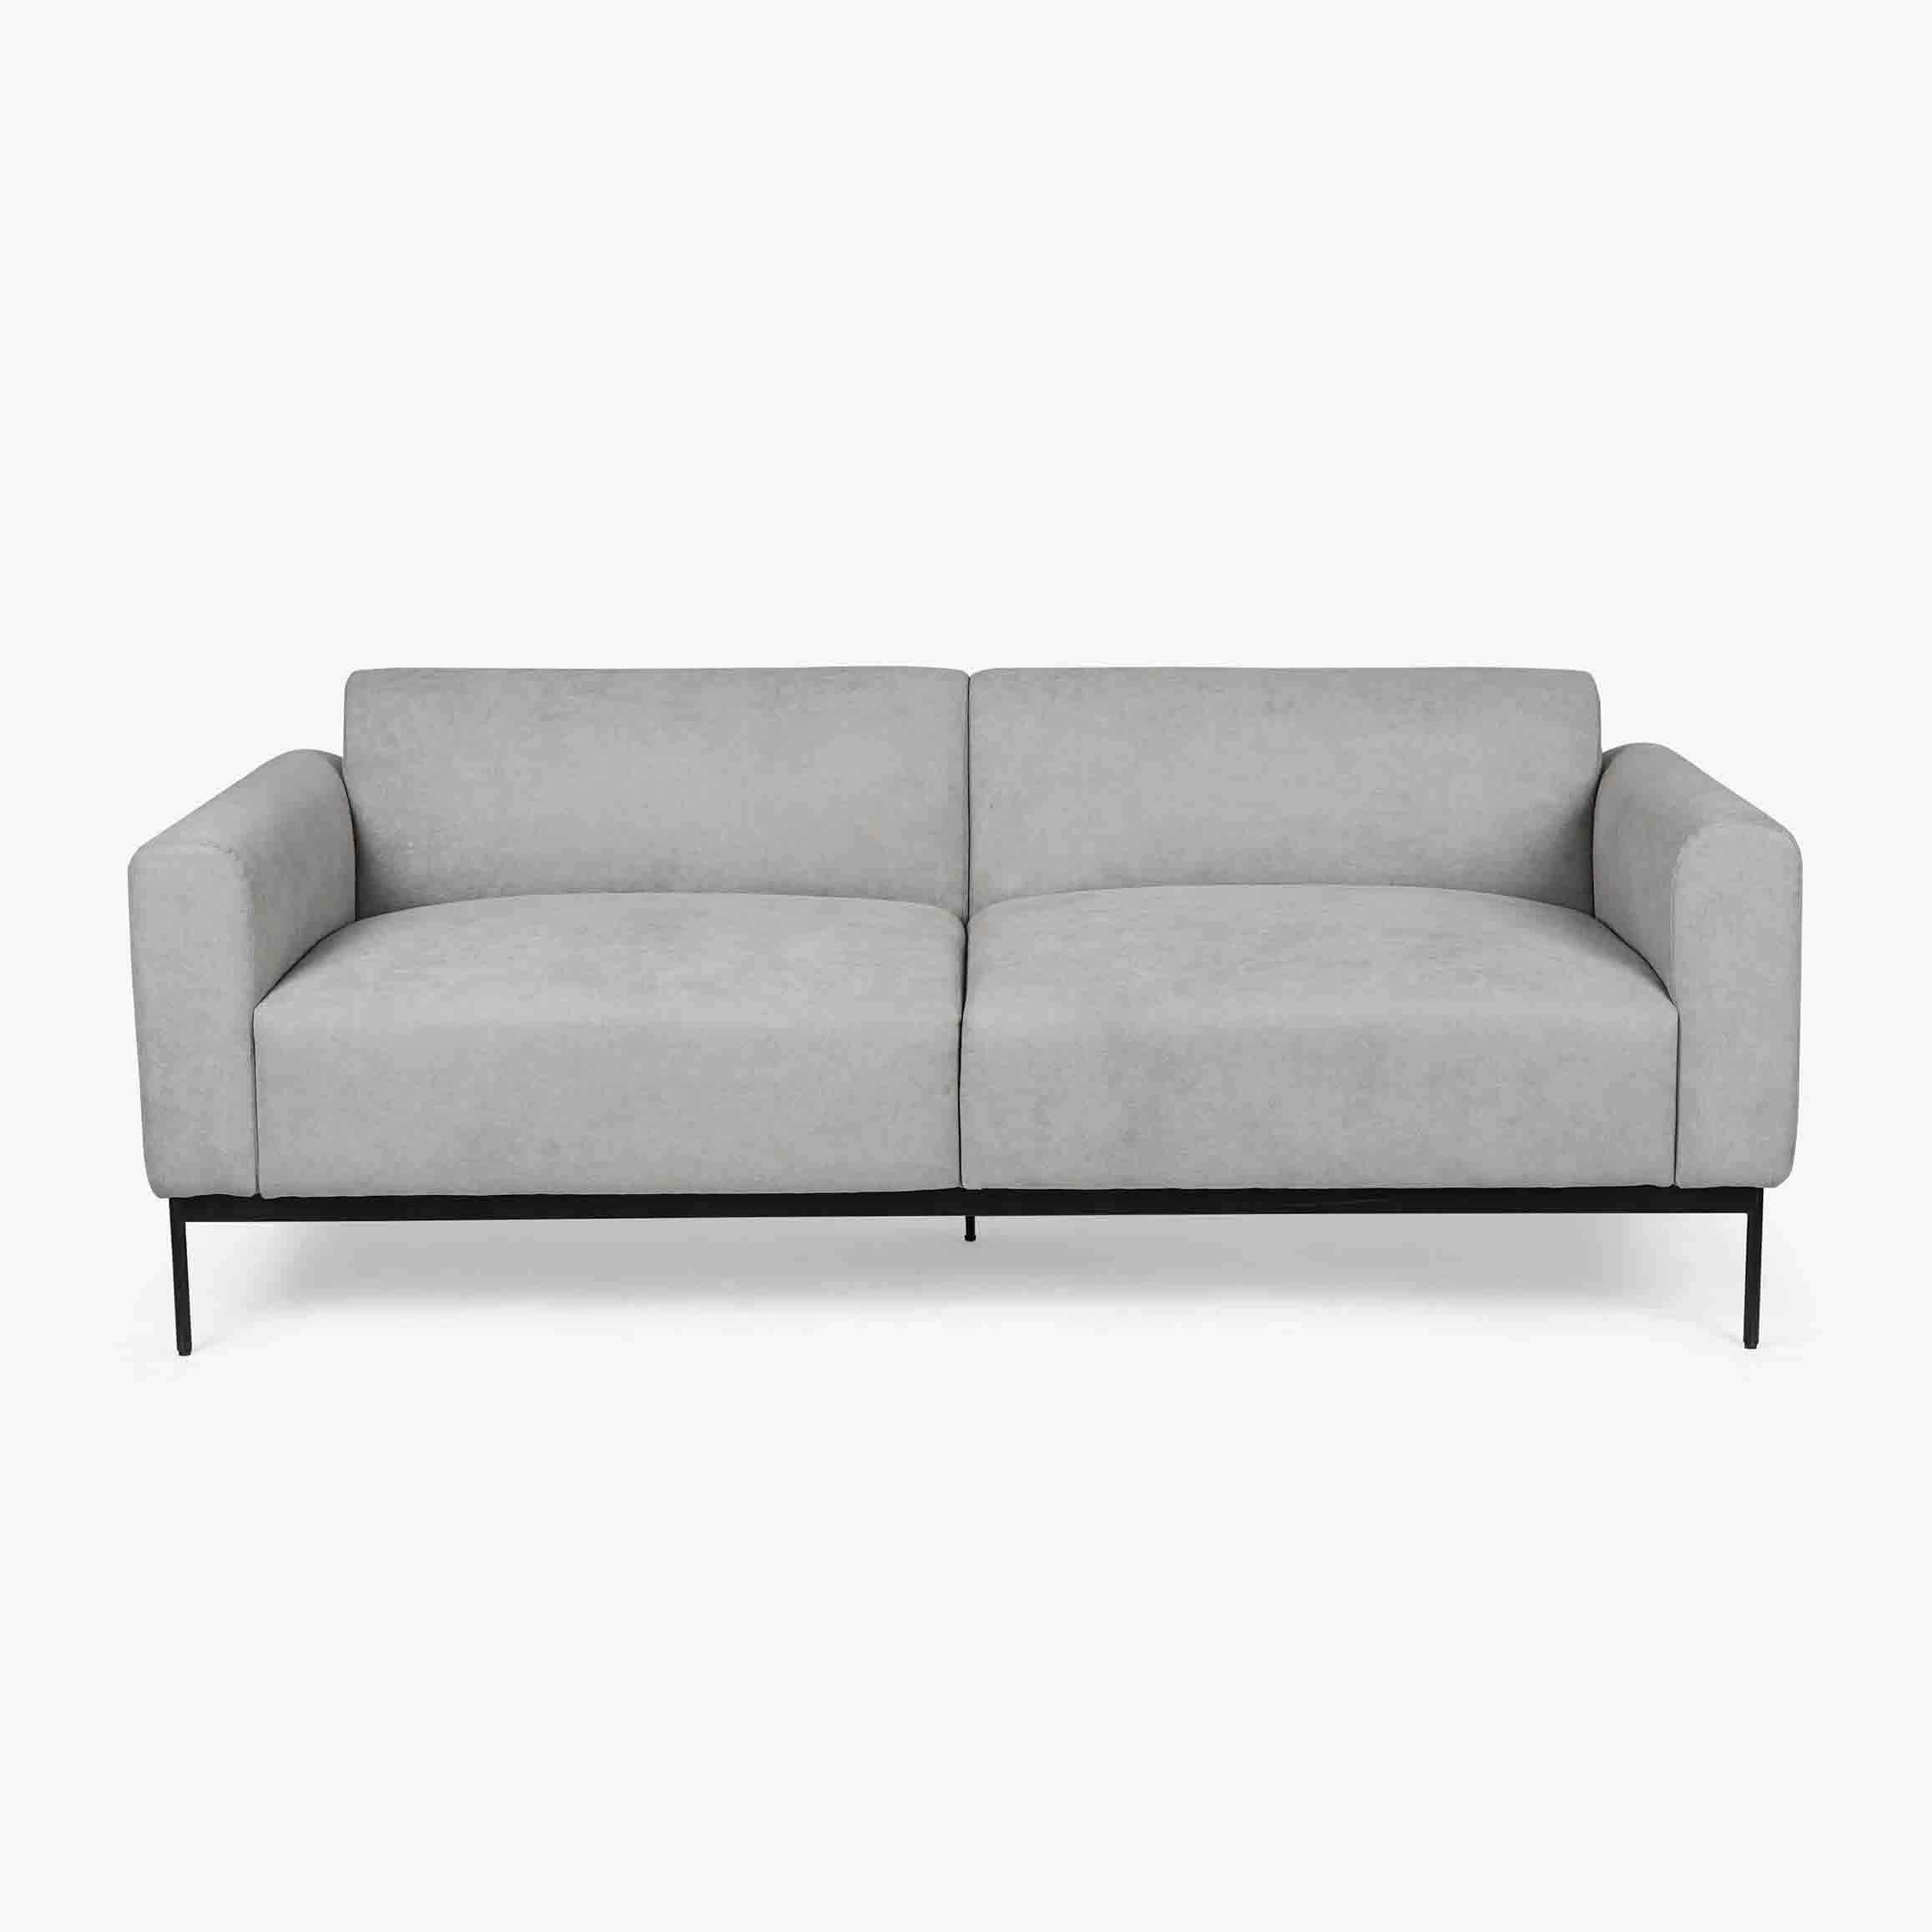 Barcelona Single Seater Sofa Grey